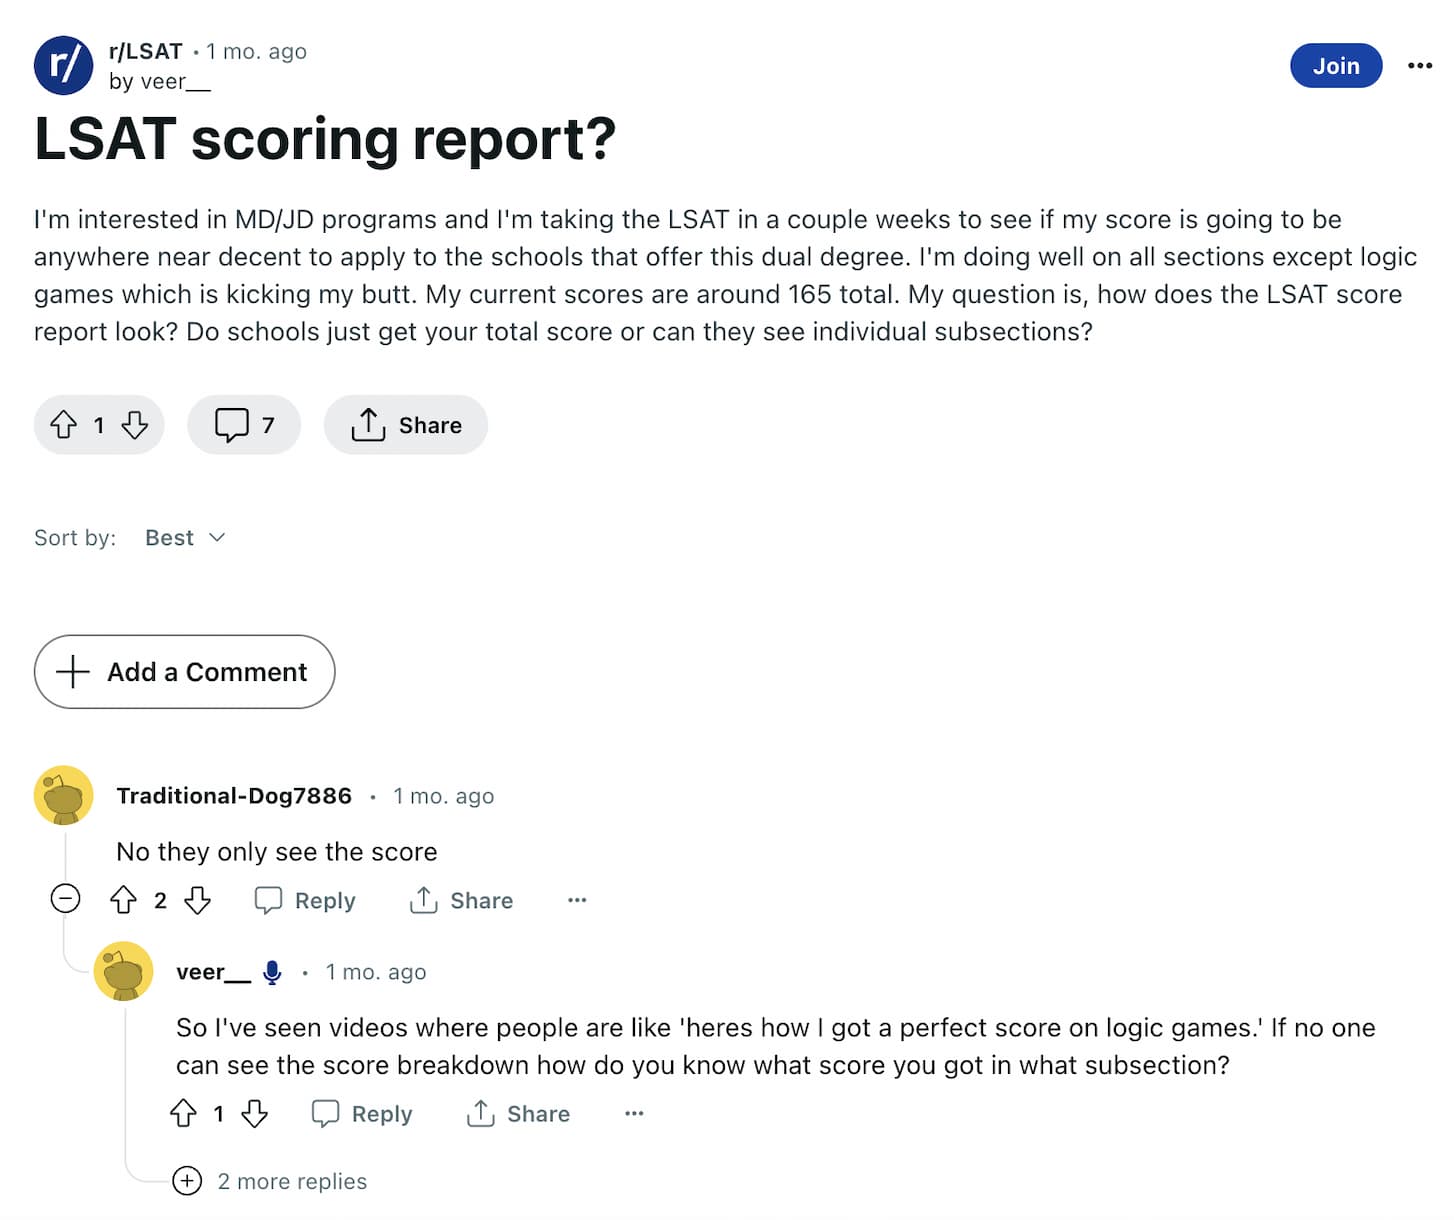 LSAT scoring report